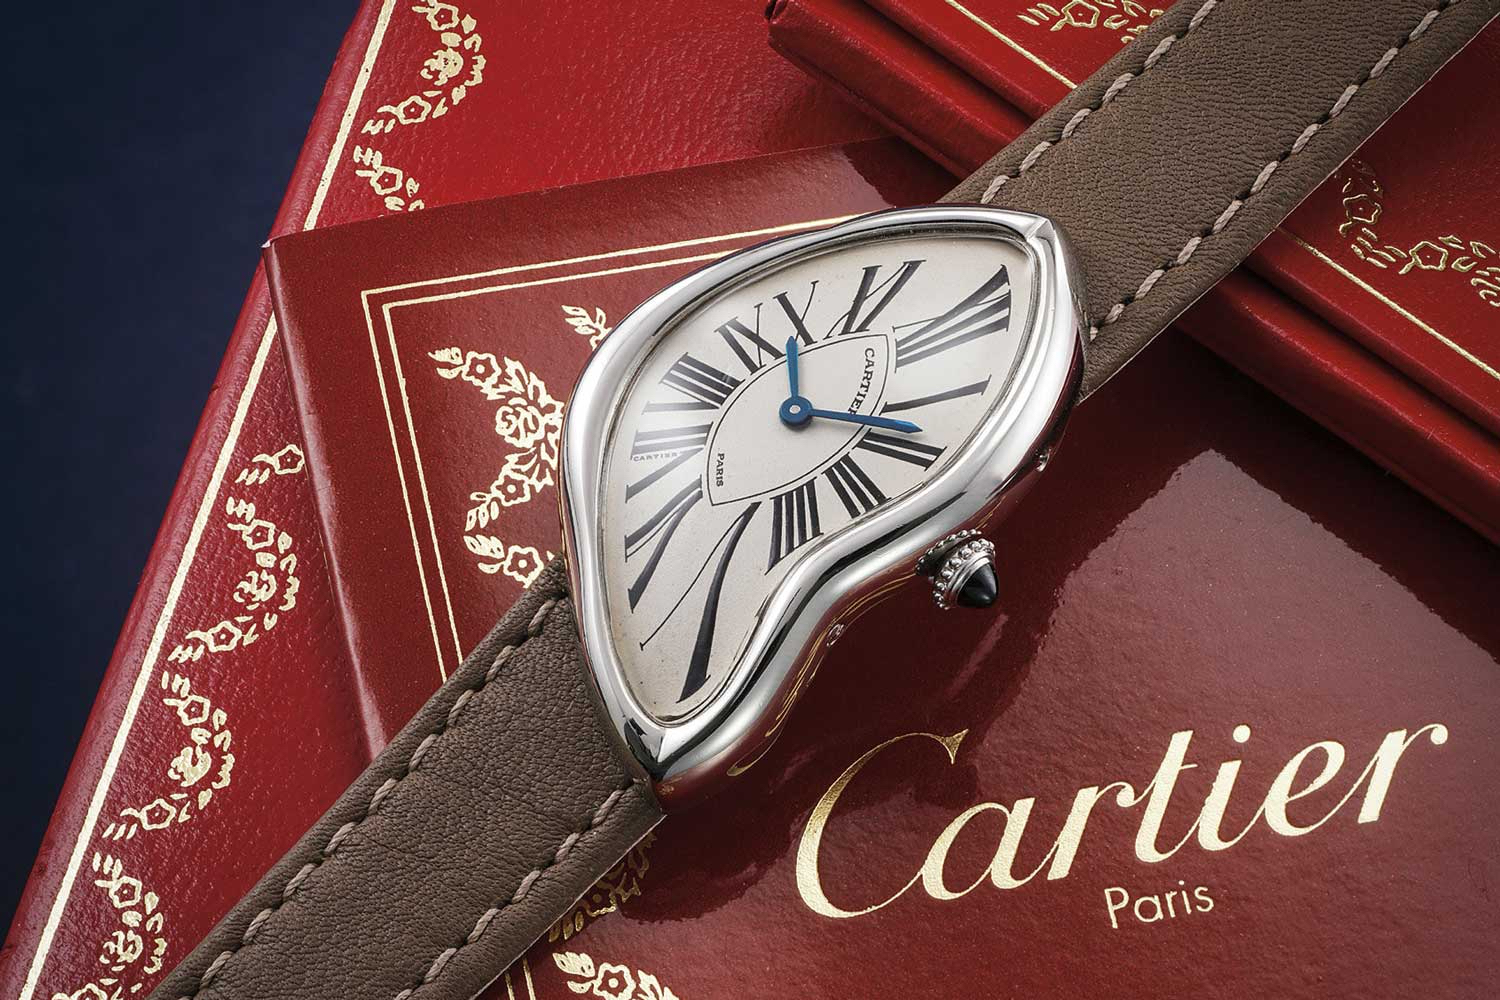 cartier watch price in bahrain